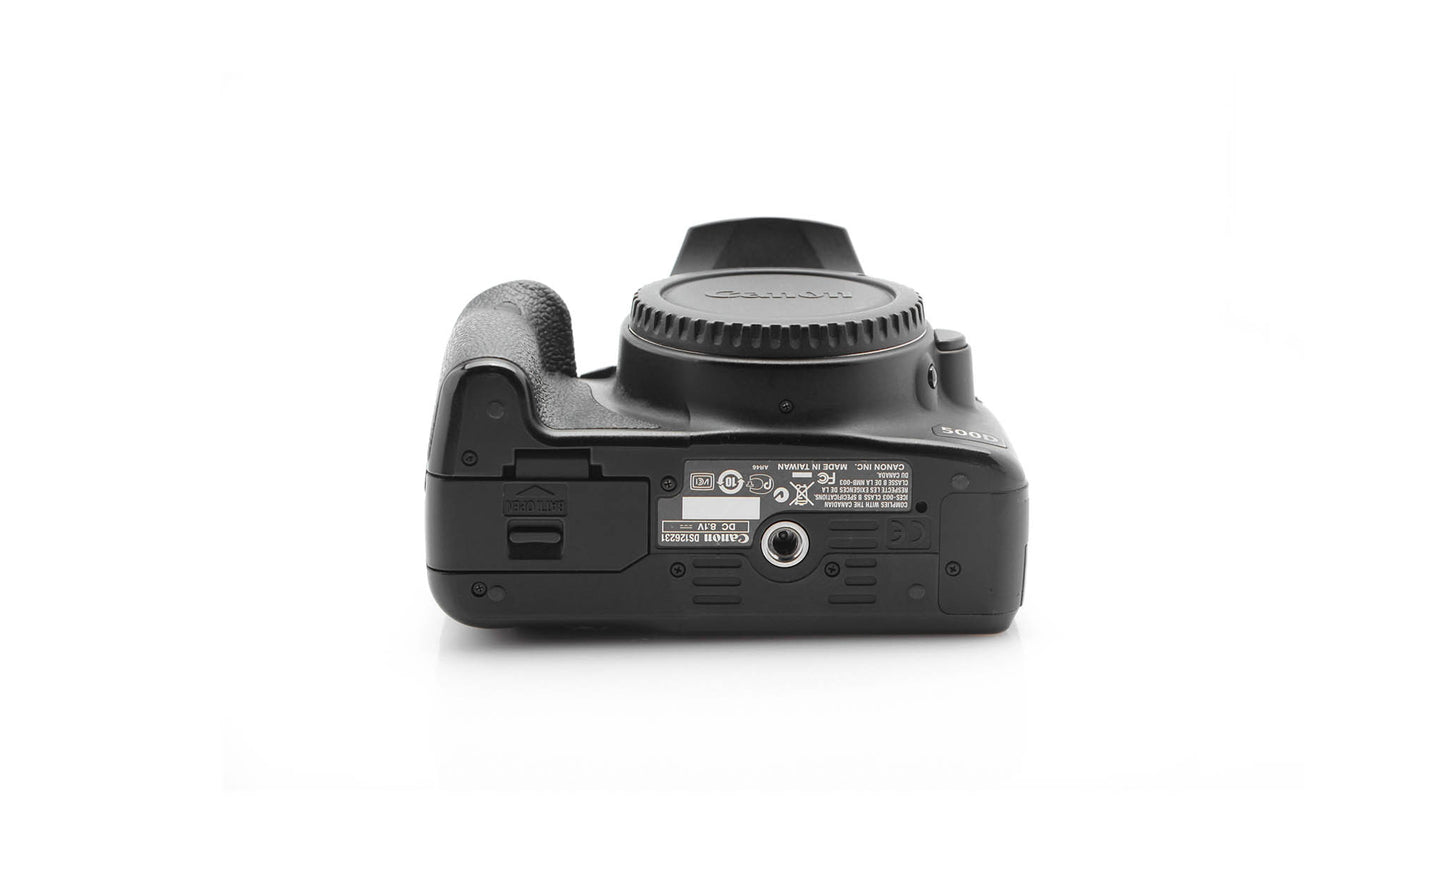 Used Canon EOS 500D Camera Body